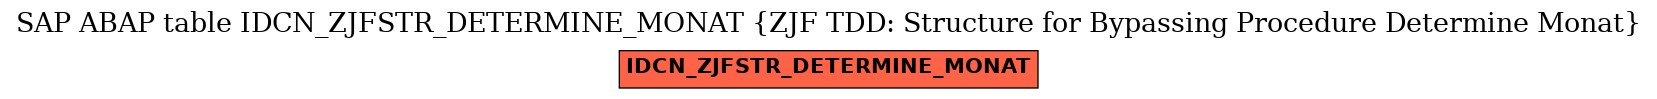 E-R Diagram for table IDCN_ZJFSTR_DETERMINE_MONAT (ZJF TDD: Structure for Bypassing Procedure Determine Monat)